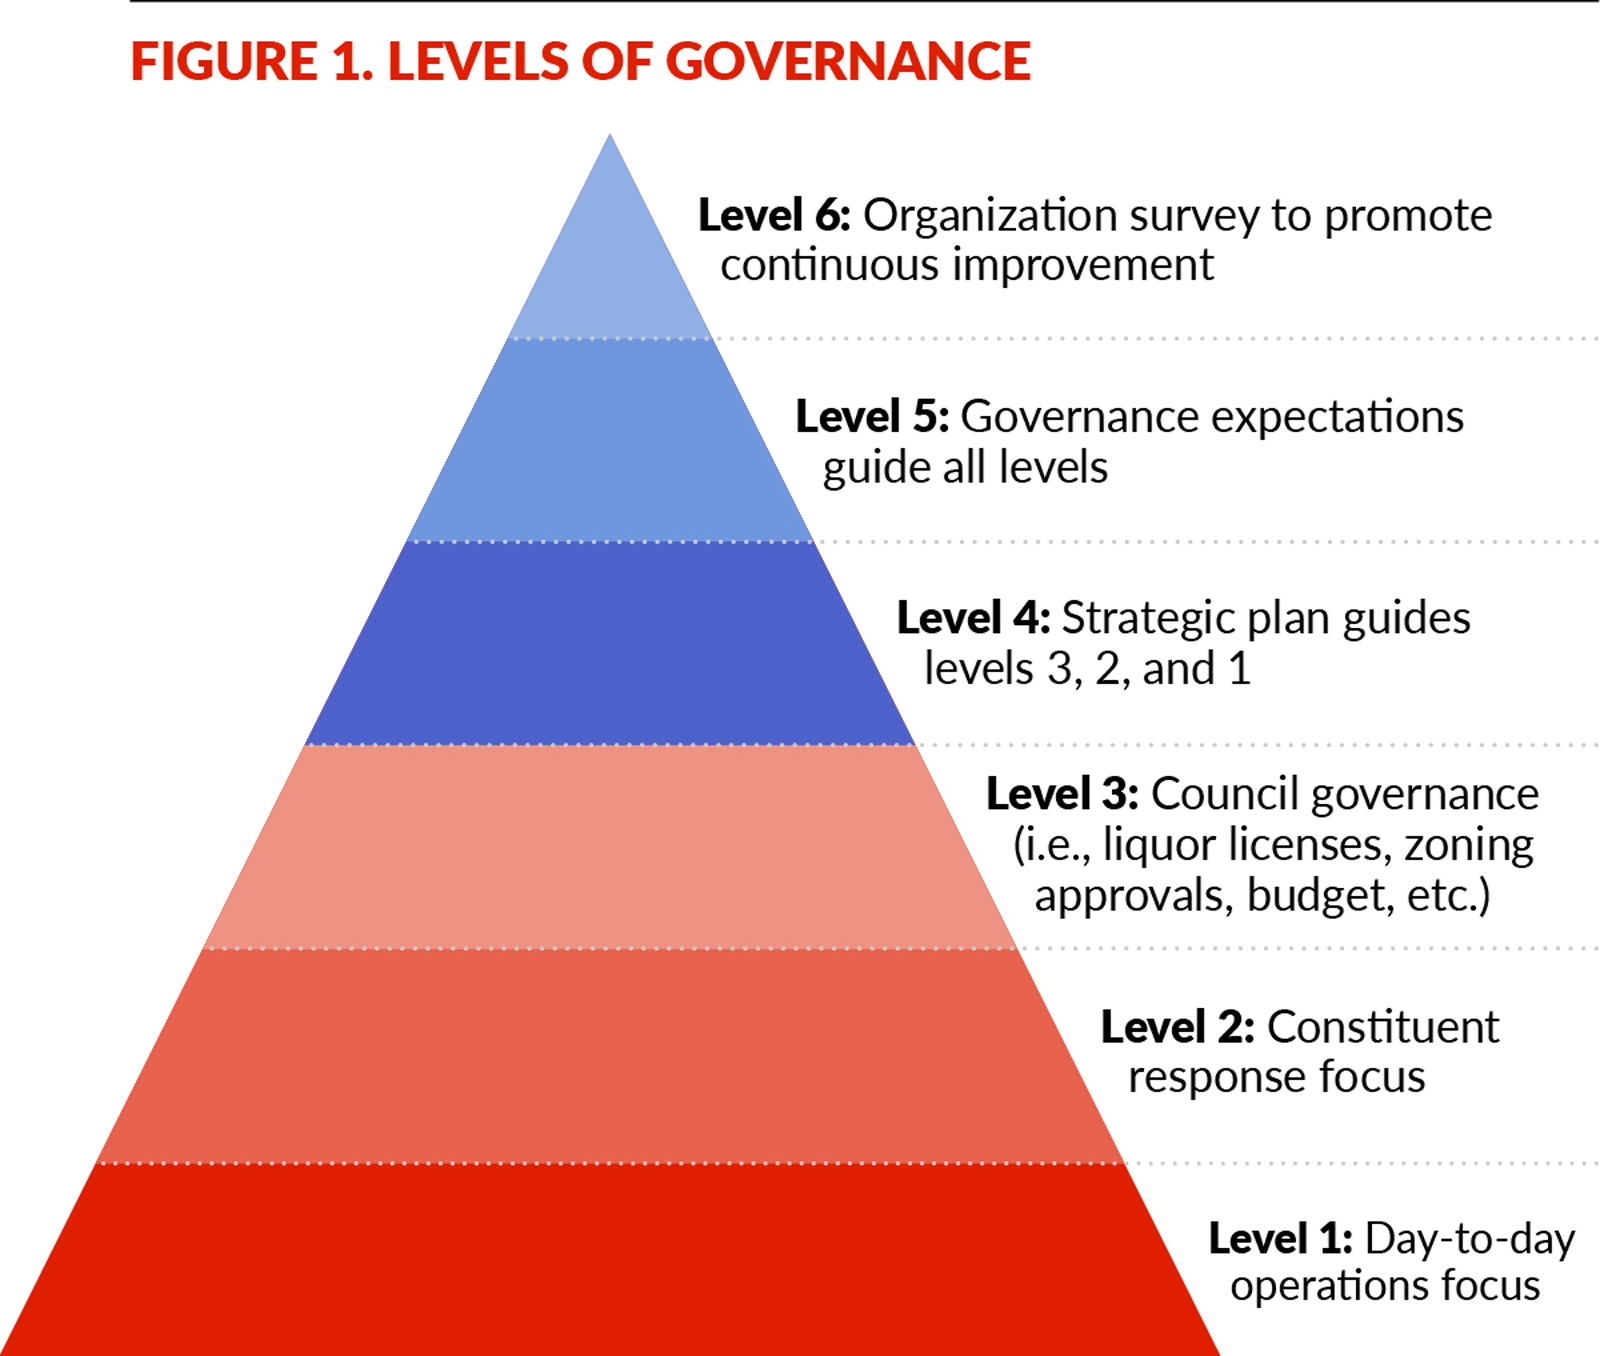 Figure showing levels of governance